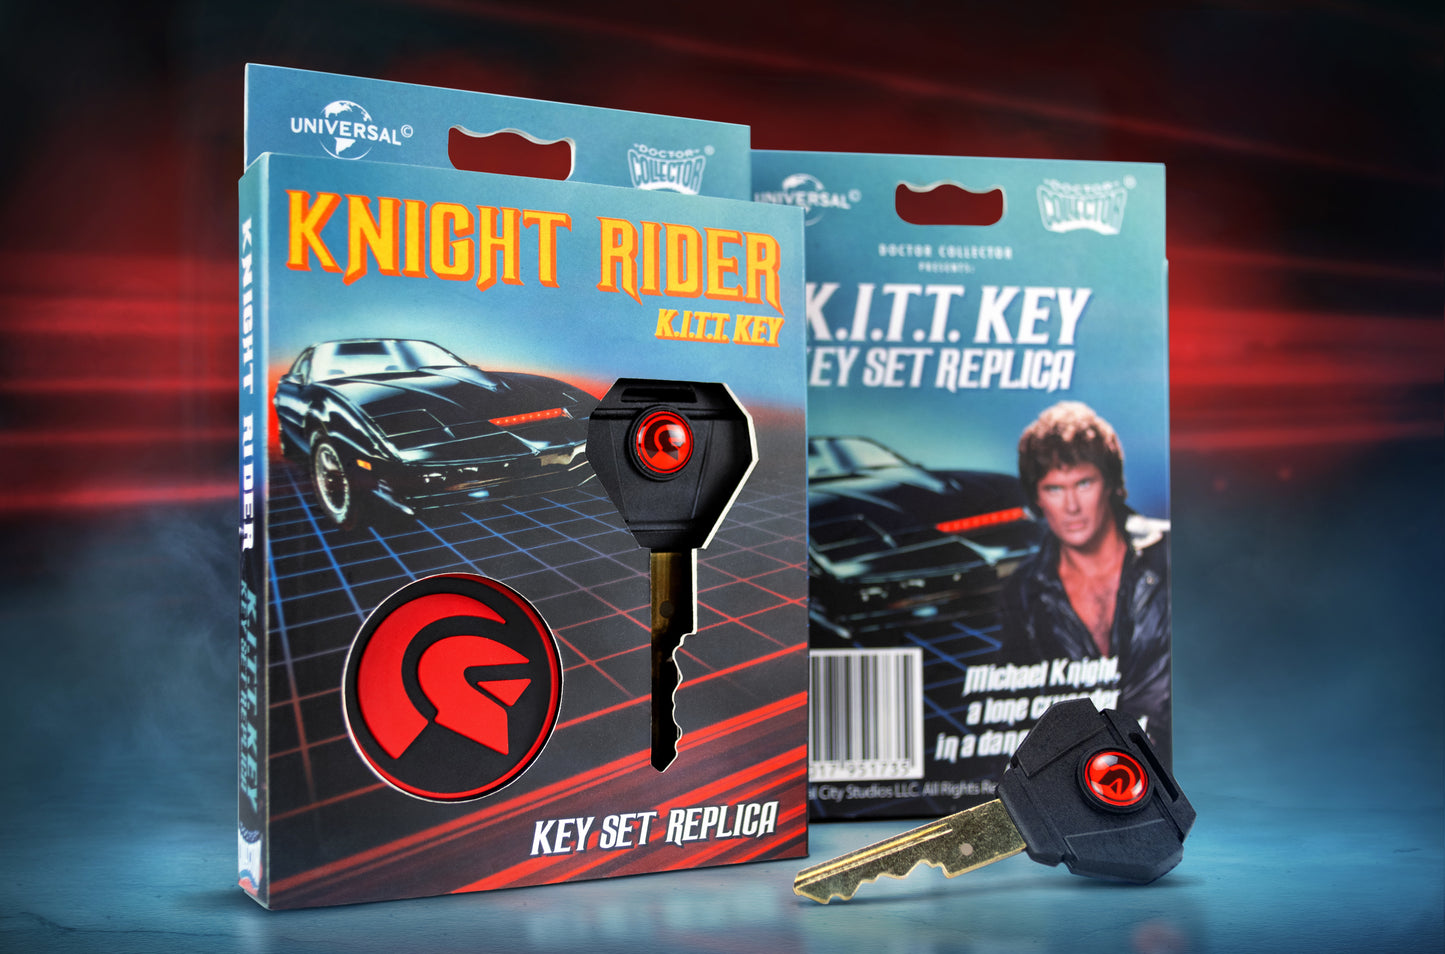 Knight Rider KITT Key Plate Replica - In Stock!